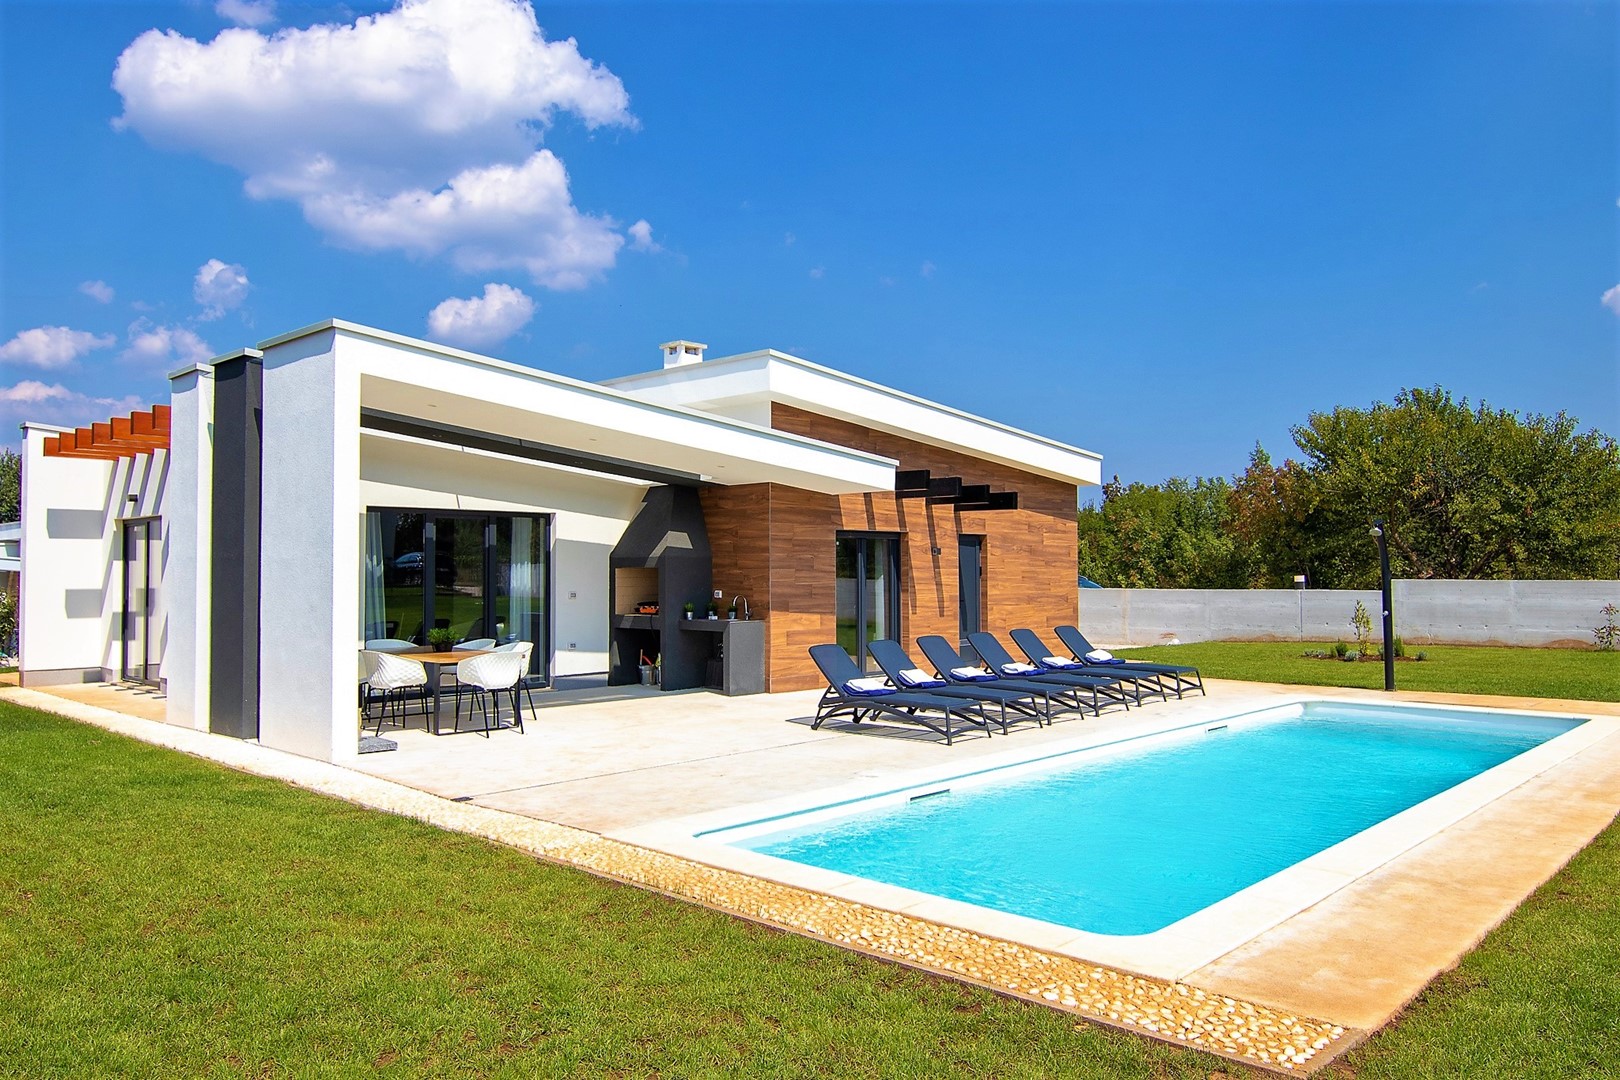 Schöne modern gebaute Villa in Mittelistrien  in Kroatien